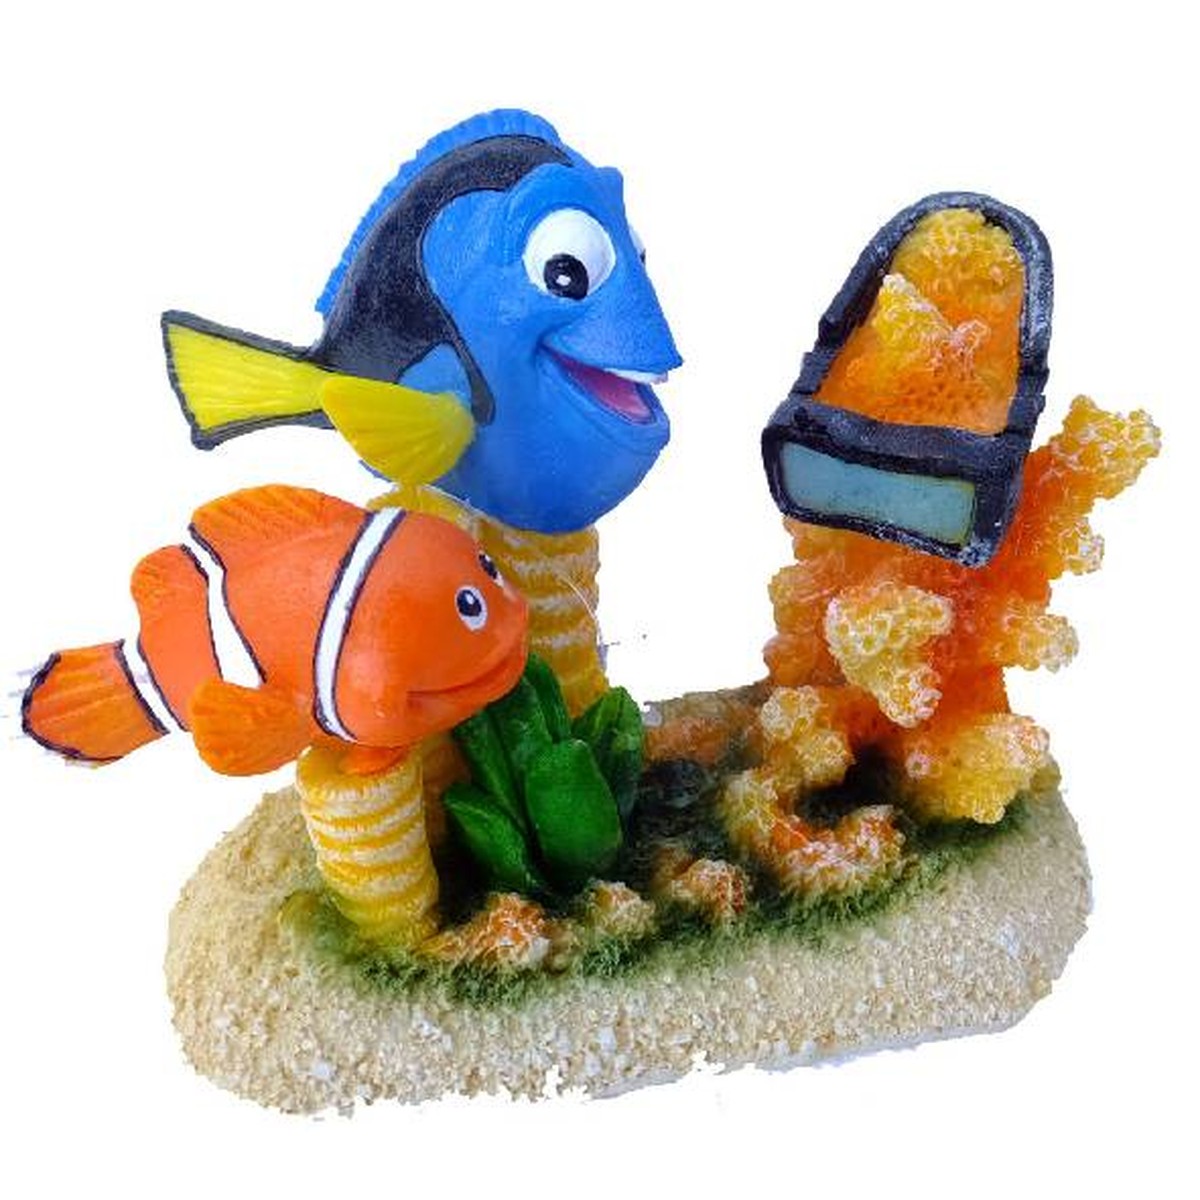   Décor Clown fish - 6 ca.6.5x4x4.5 cm  6.5x4x4.5cm